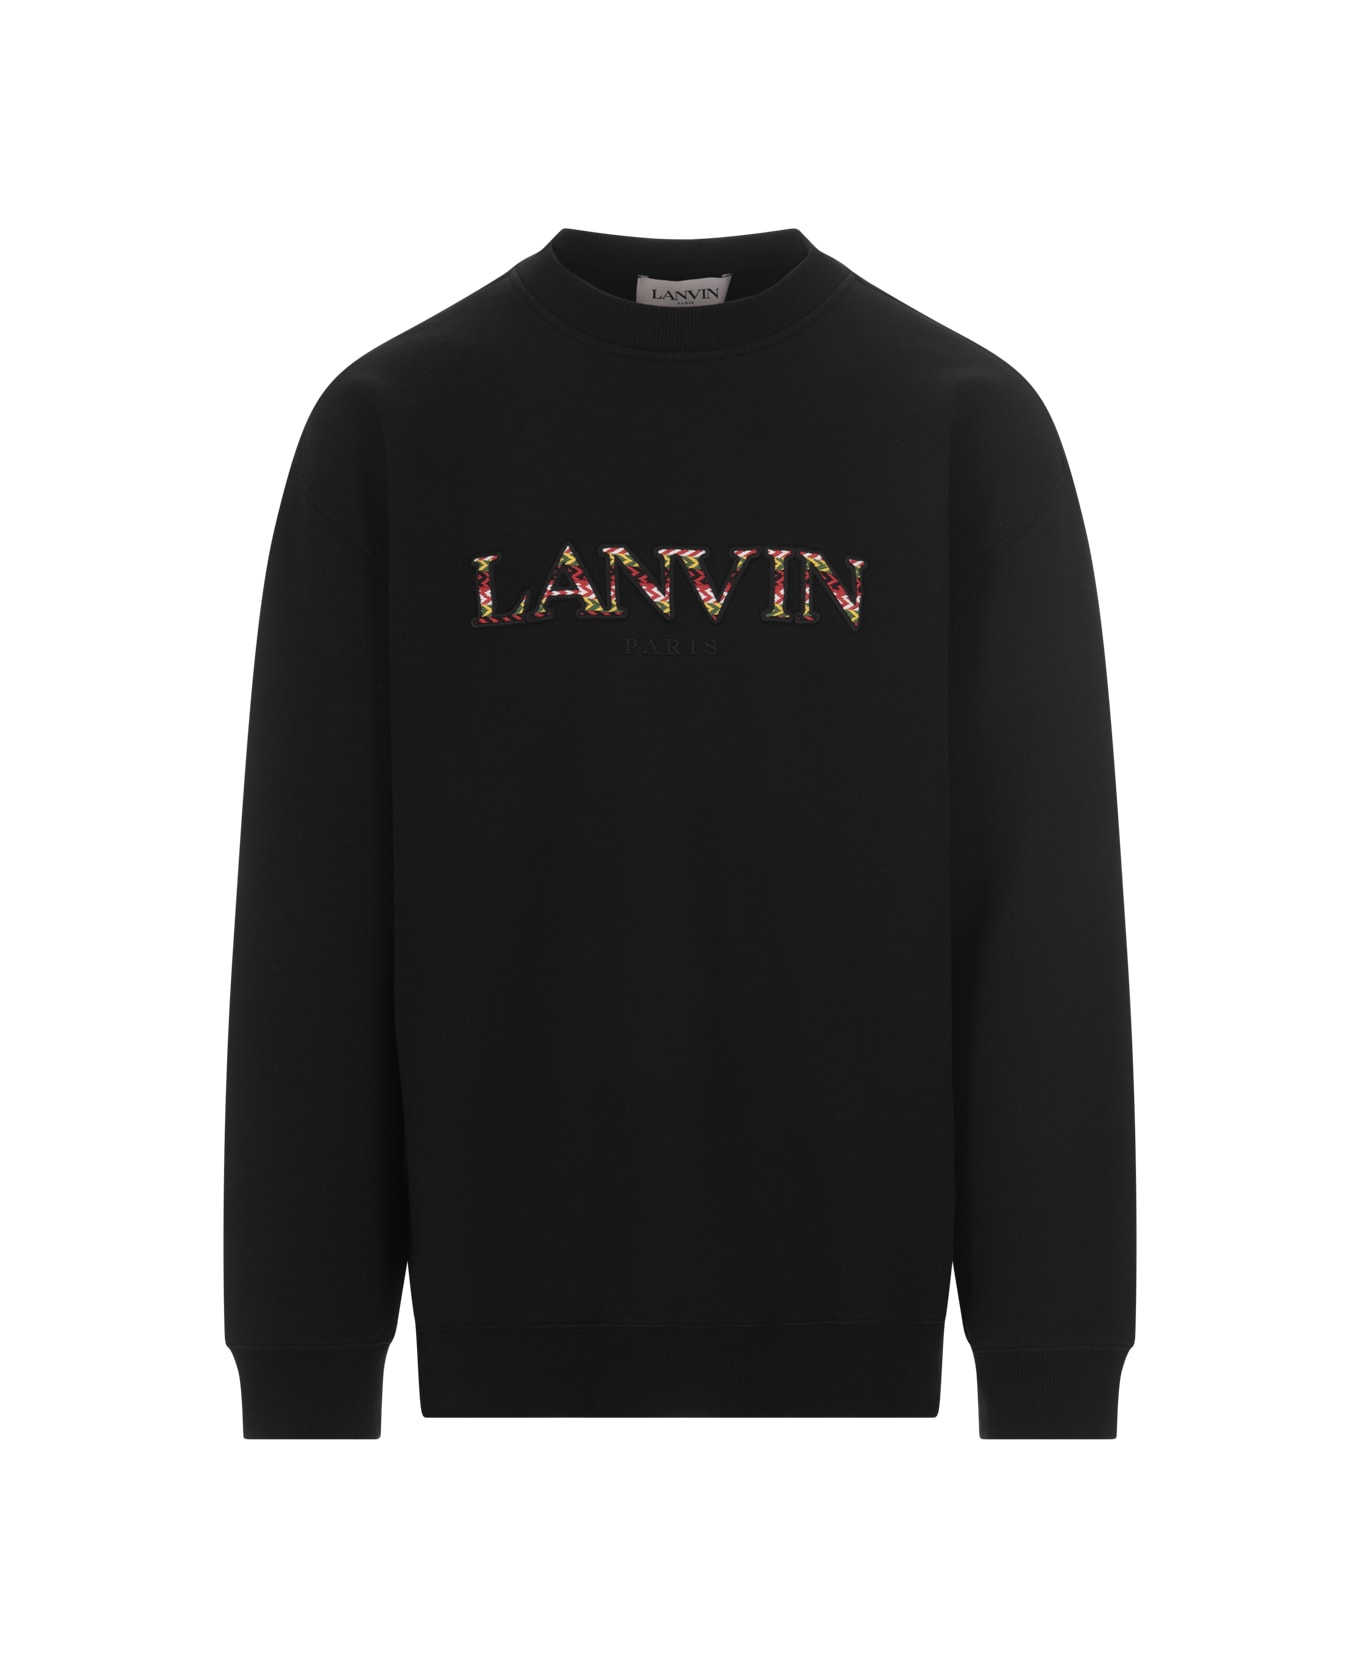 Lanvin Black Sweatshirt With Embroidered Lanvin Curb Logo - Black